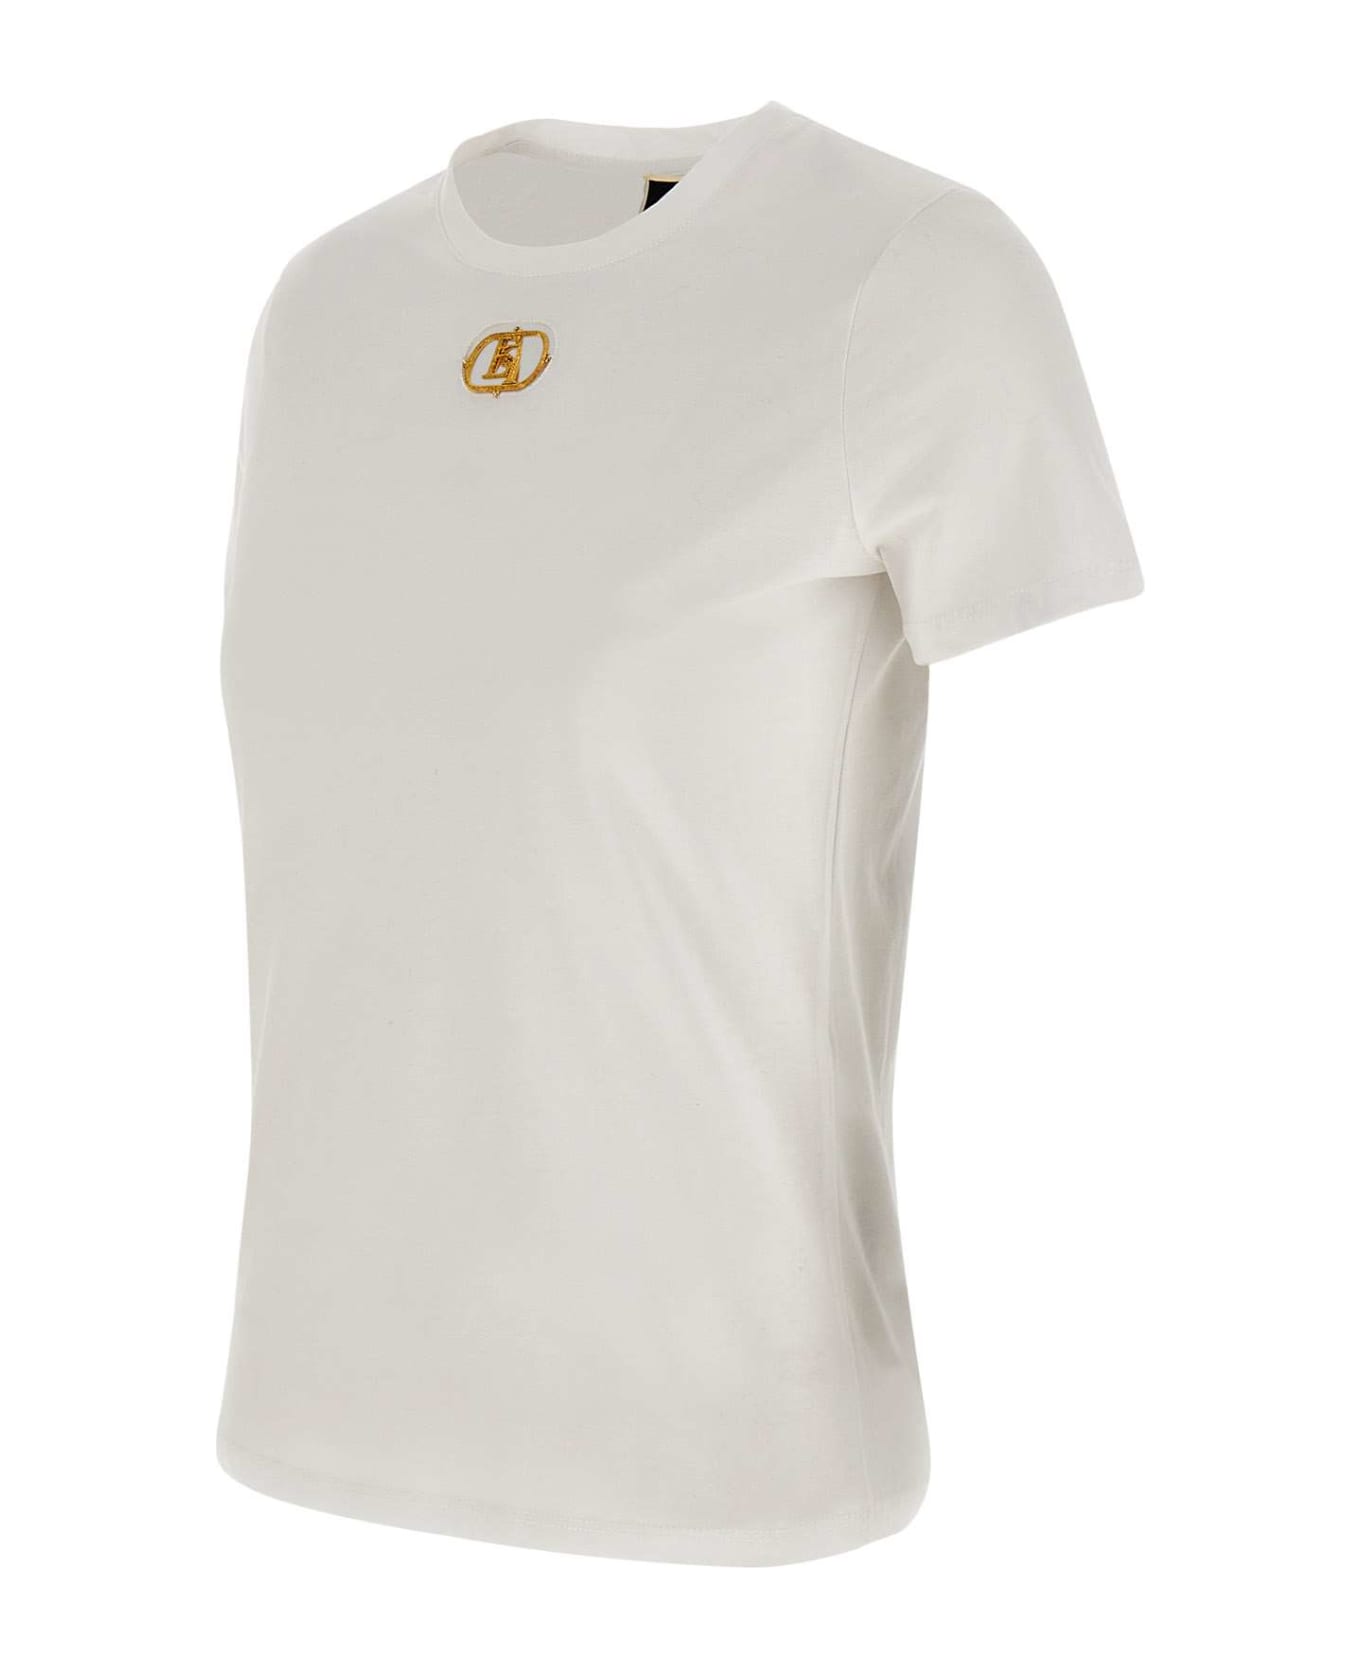 Elisabetta Franchi 'urban' Cotton Jersey T-shirt - WHITE Tシャツ